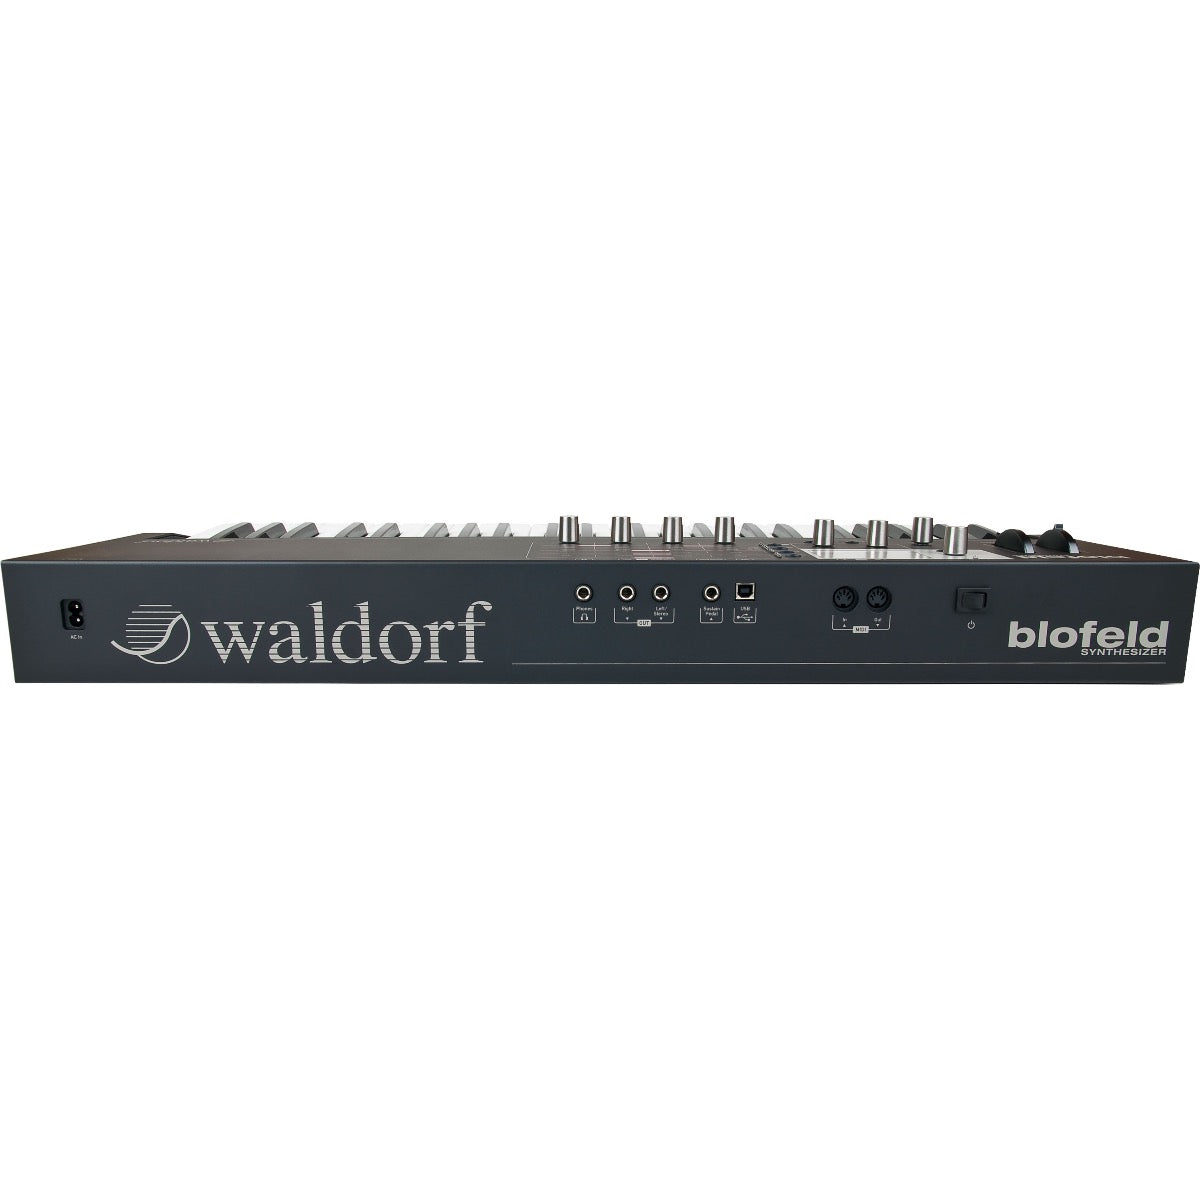 Waldorf Blofeld Keyboard Synthesizer - Black / Shadow Edition View 1